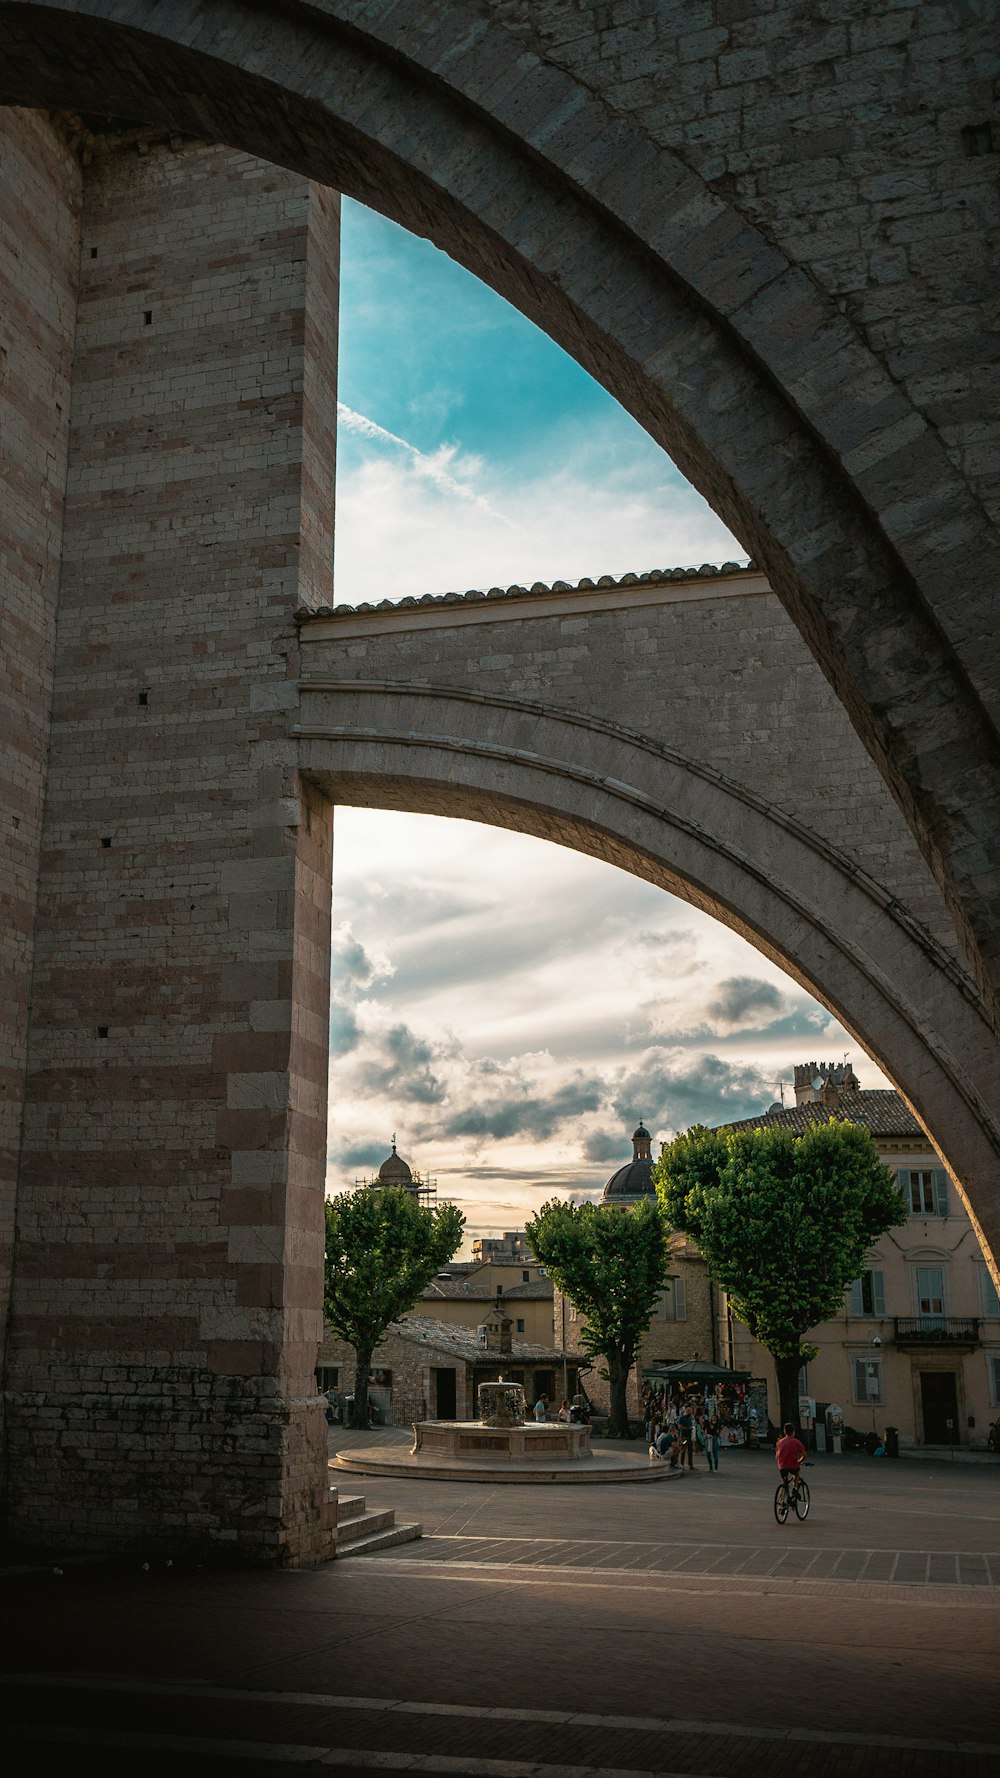 brown brick arch under blue sky during daytime